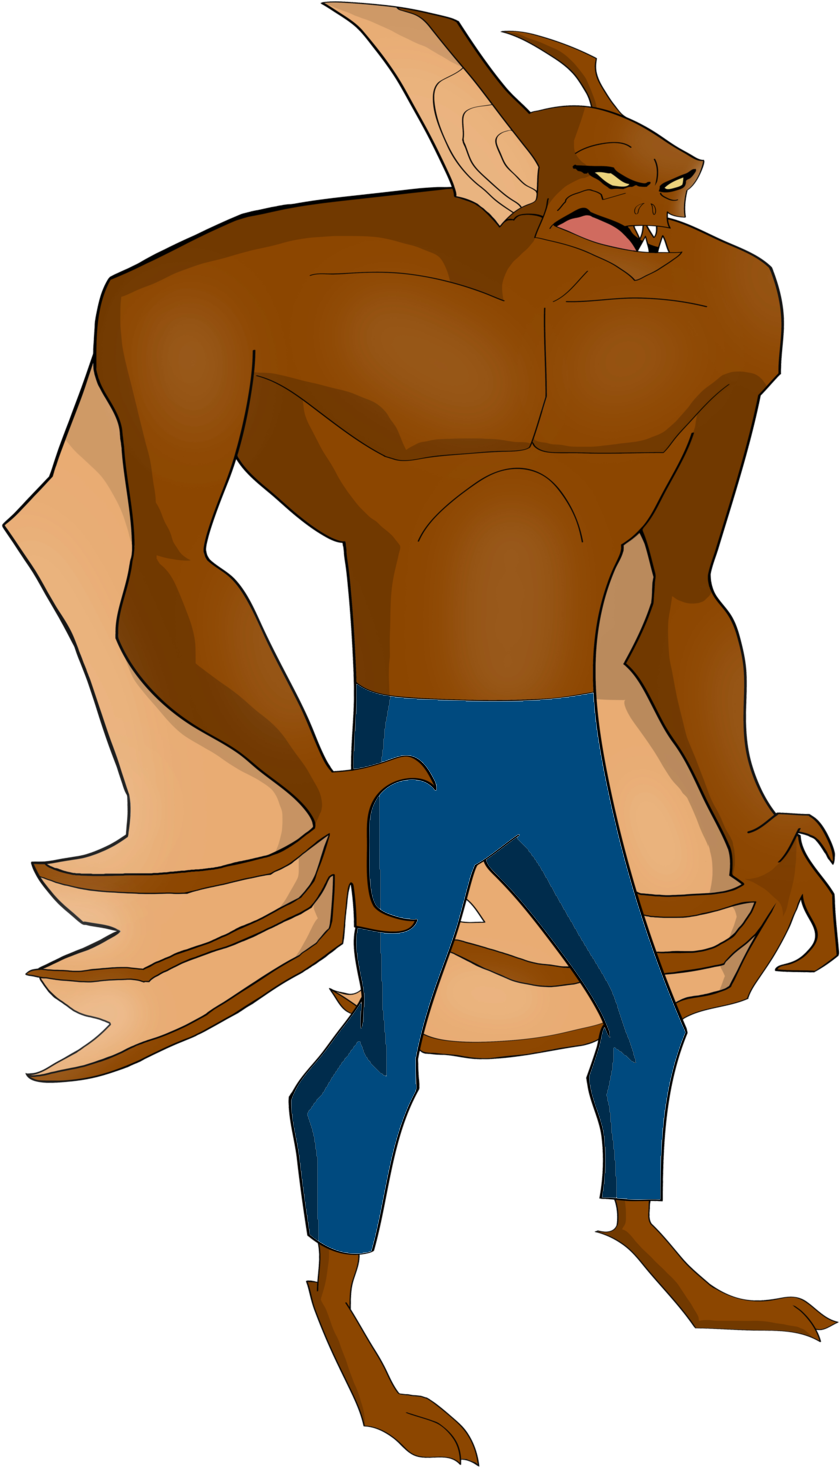 Man-bat - Animated Series Man Bat (1000x1500)